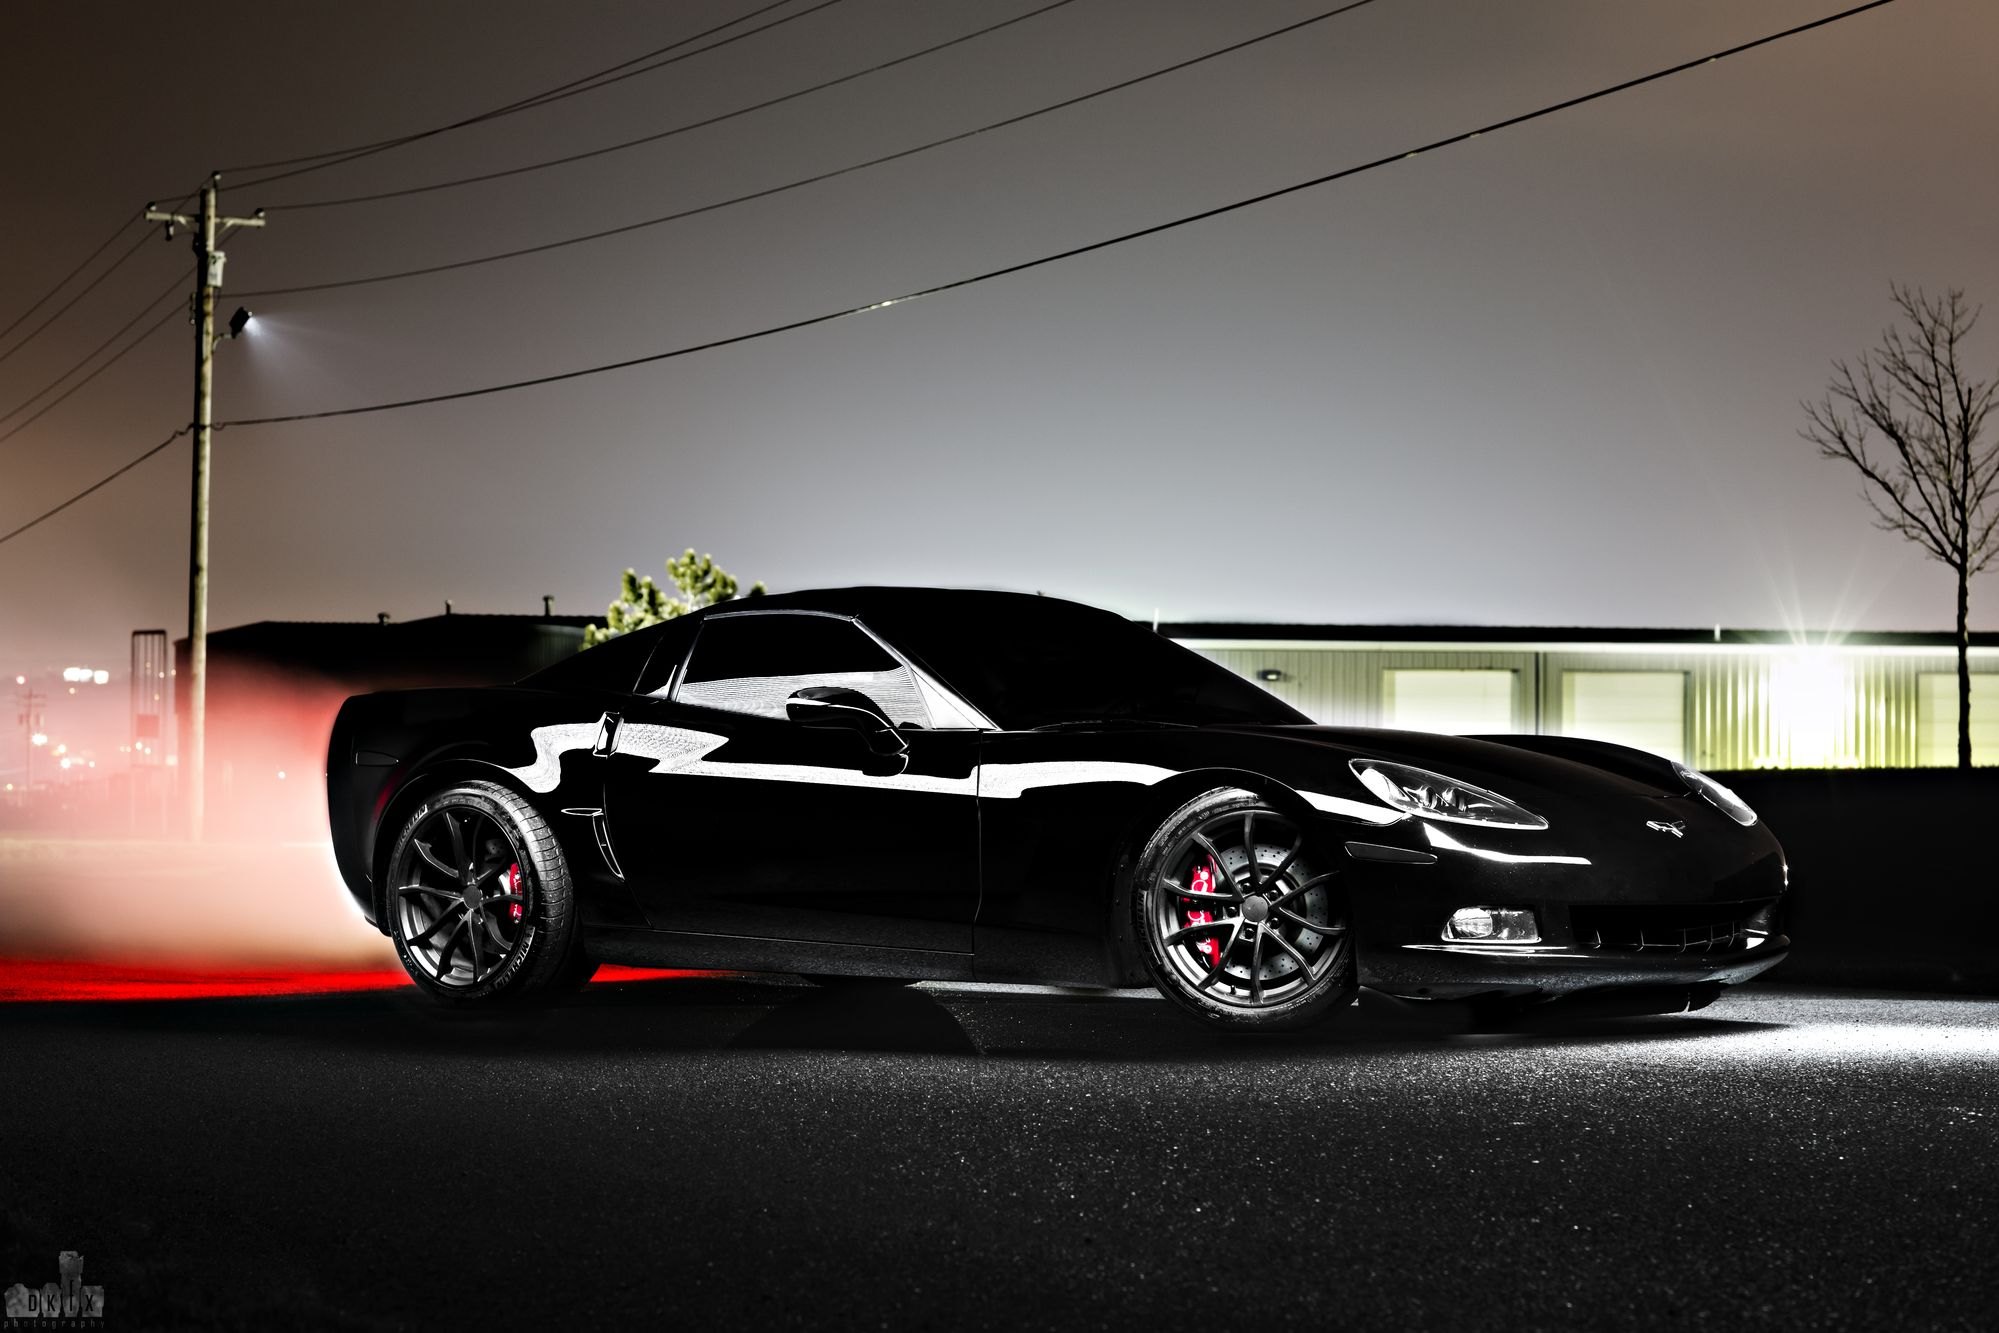 Dark Smoke Headlights on Black Chevy Corvette - Photo by dan kinzie